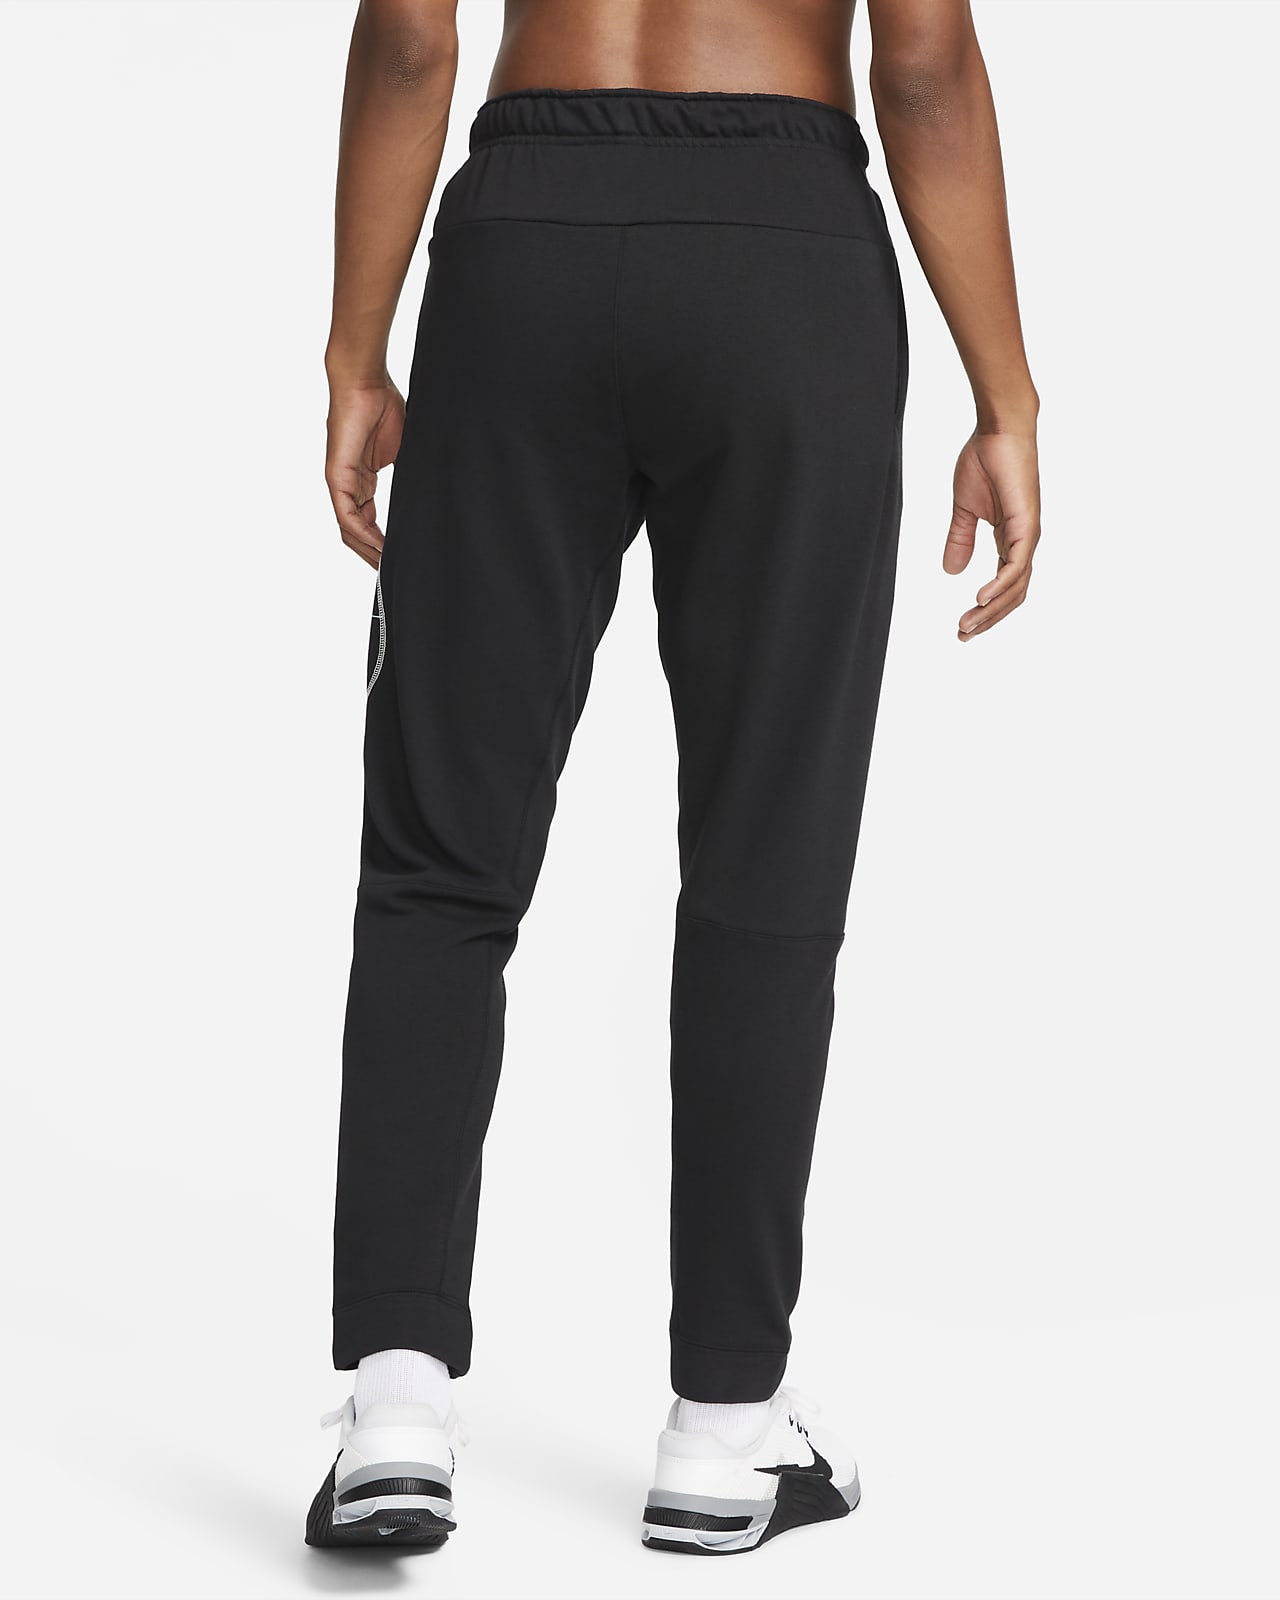 Nike Dri-FIT Men's Fleece Tapered Running Trousers. Nike LU